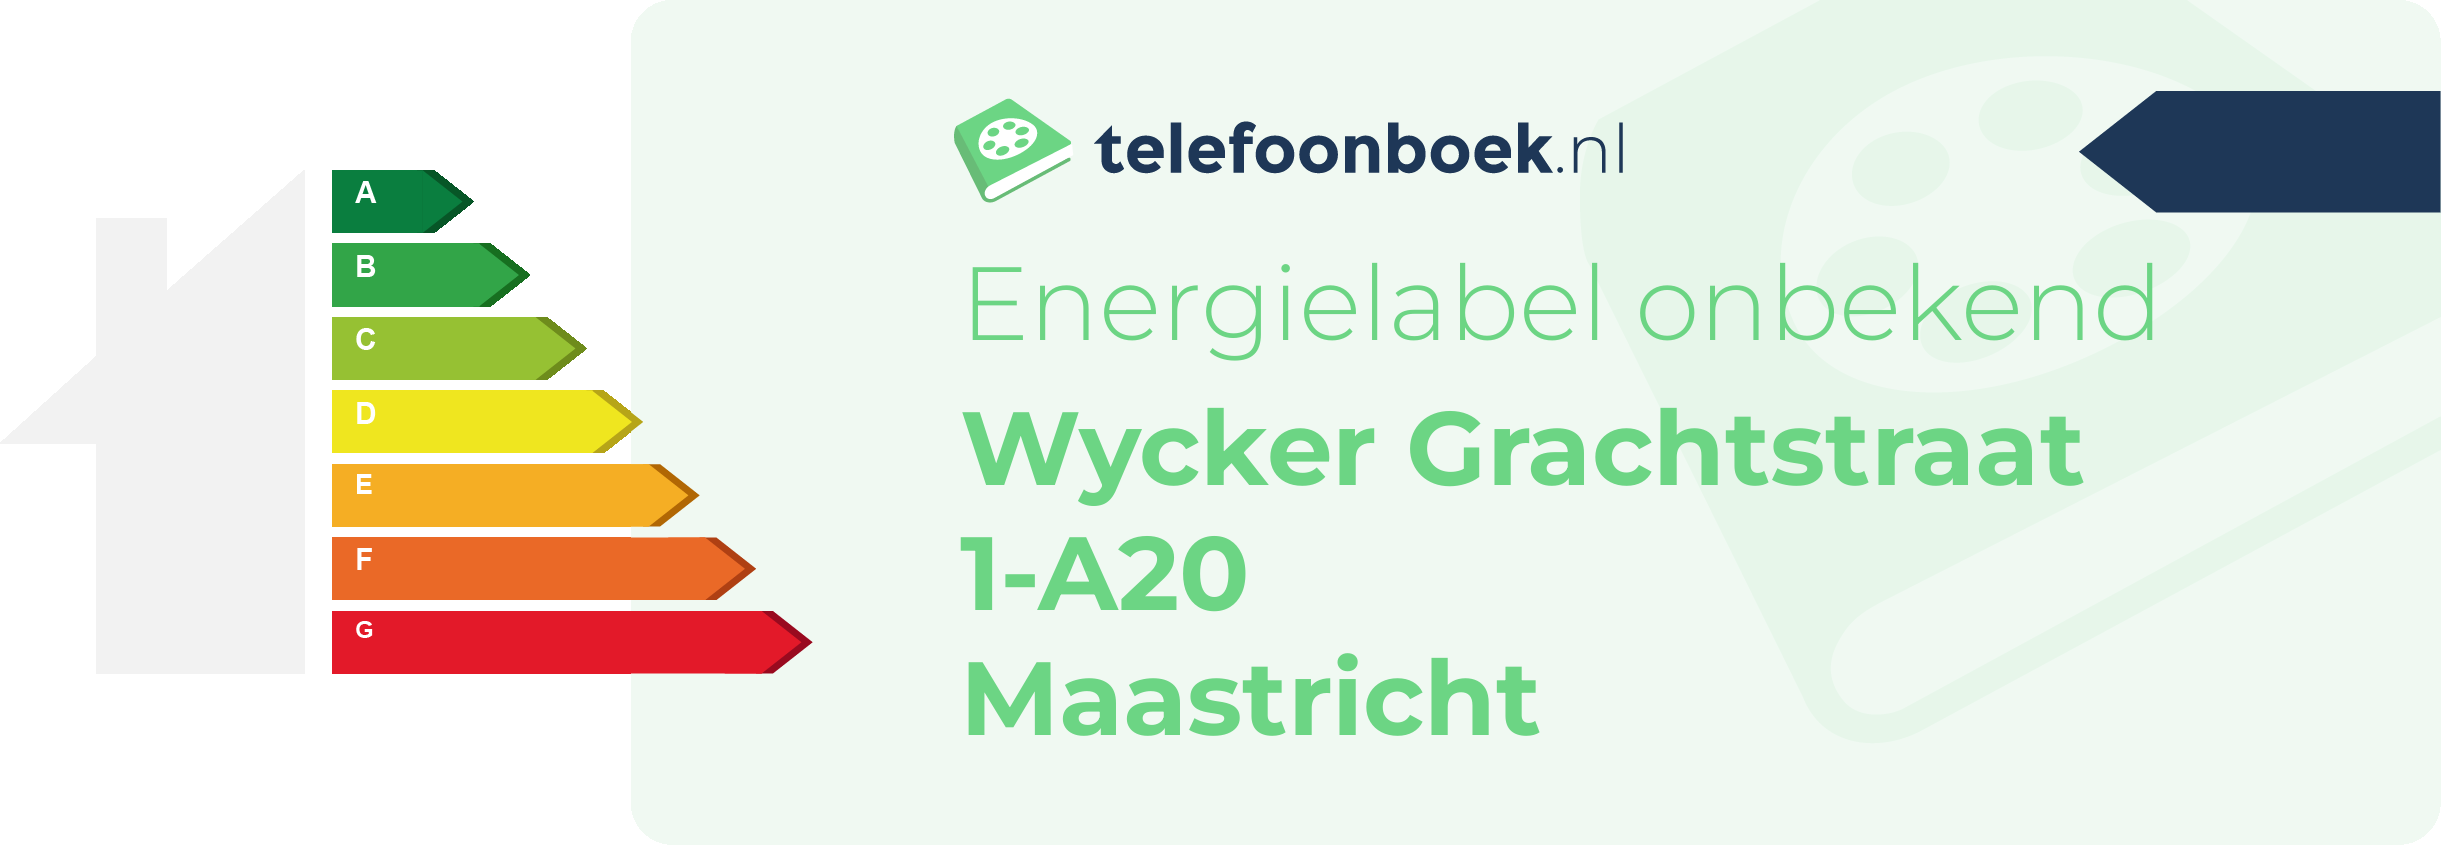 Energielabel Wycker Grachtstraat 1-A20 Maastricht